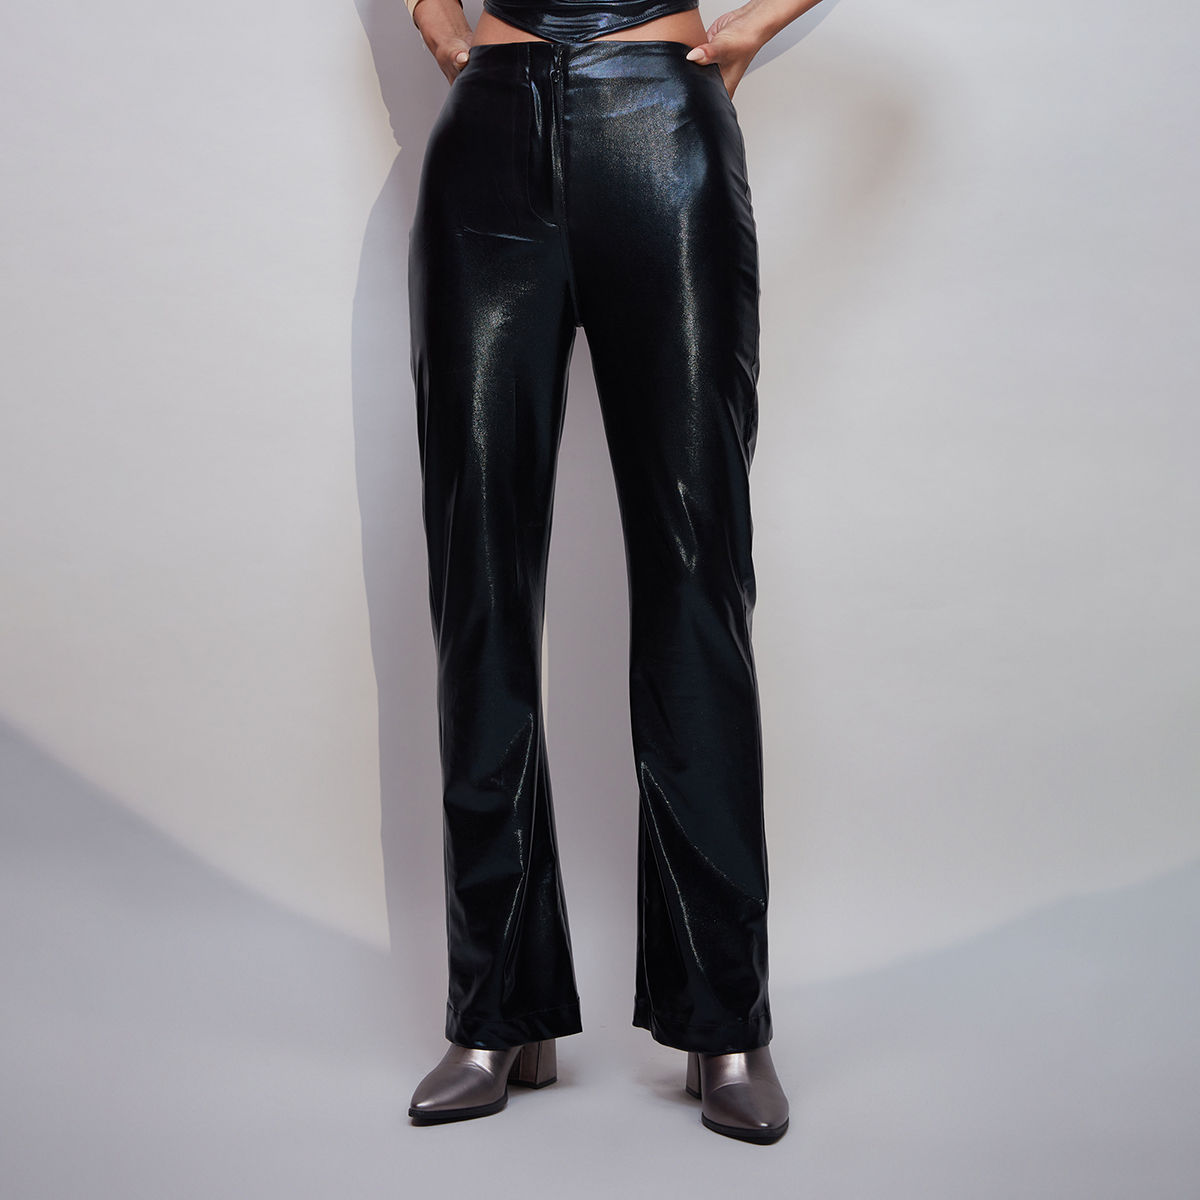 highwaisted leather pants